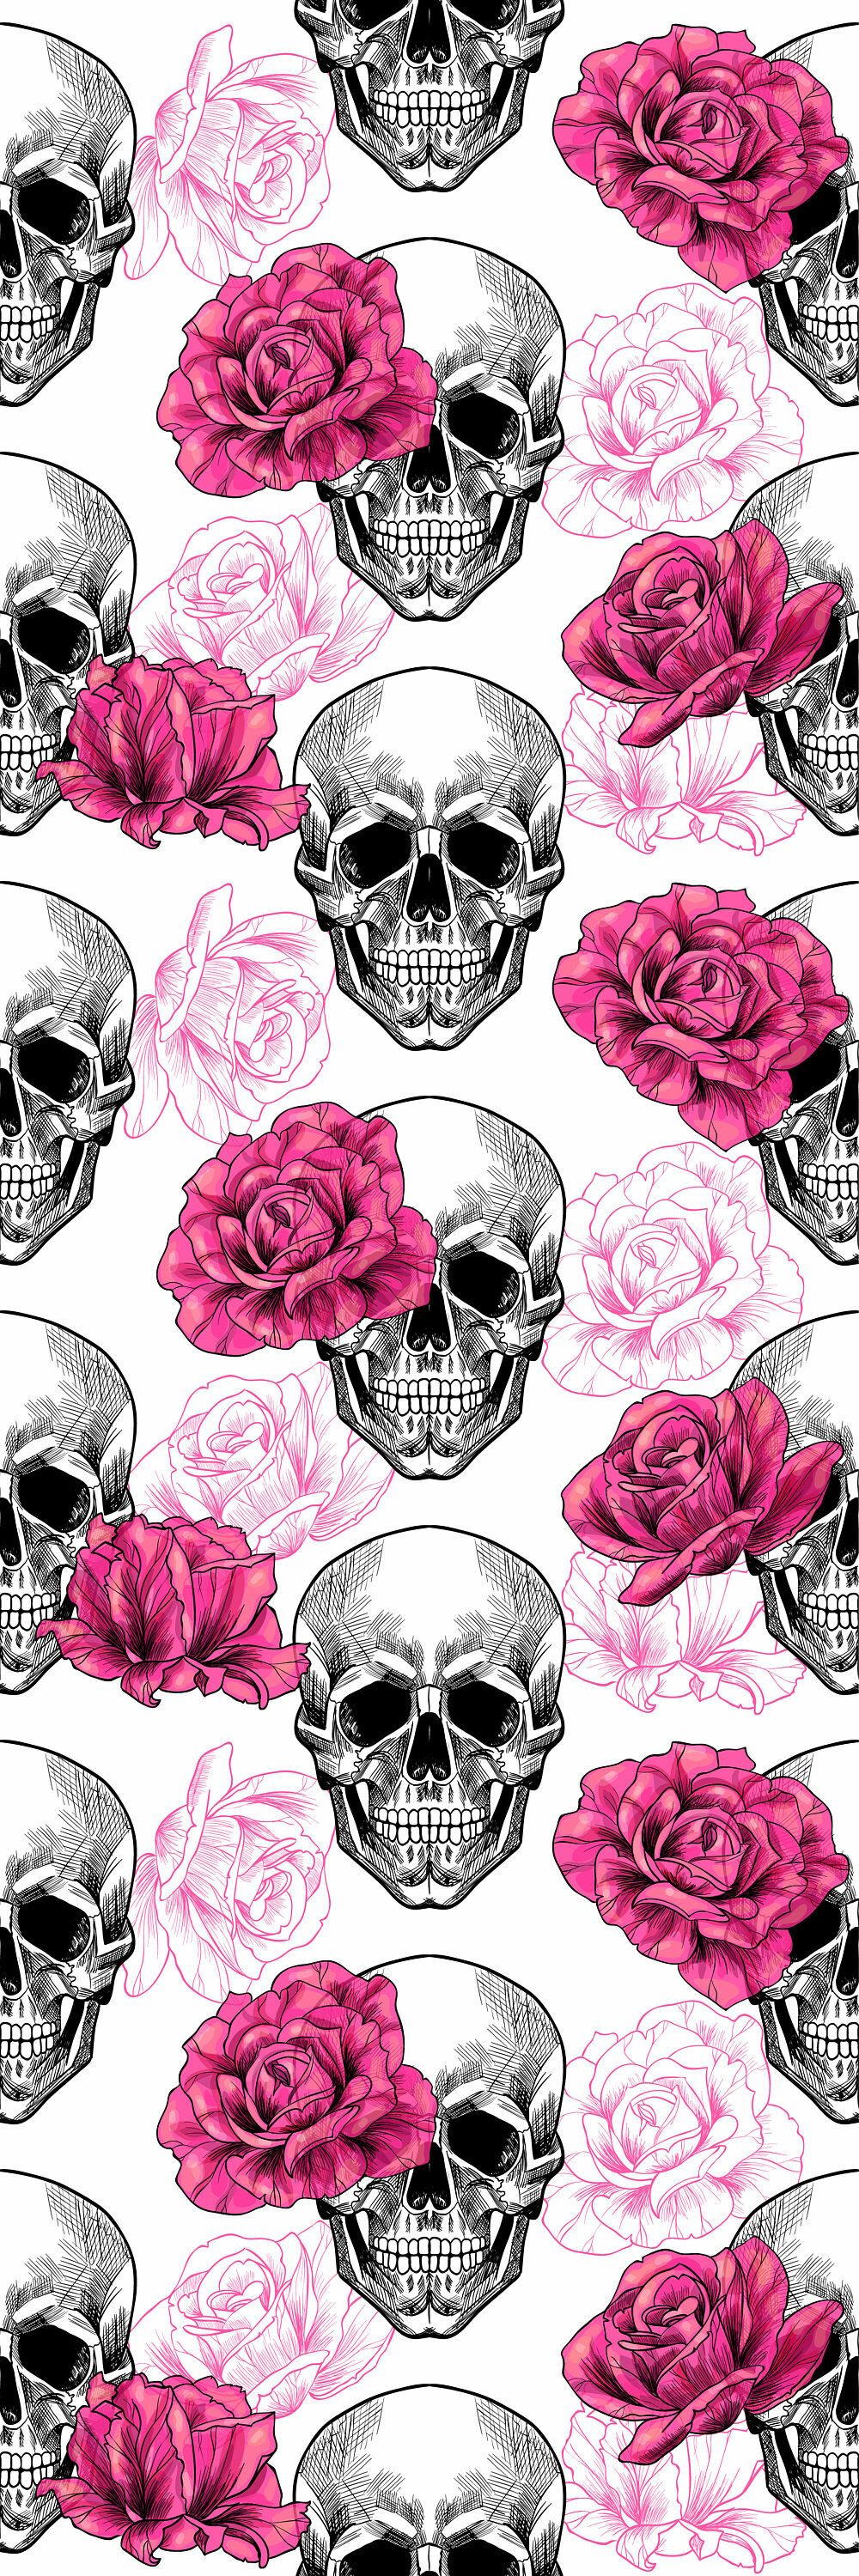 Rose And Skull Wallpaper